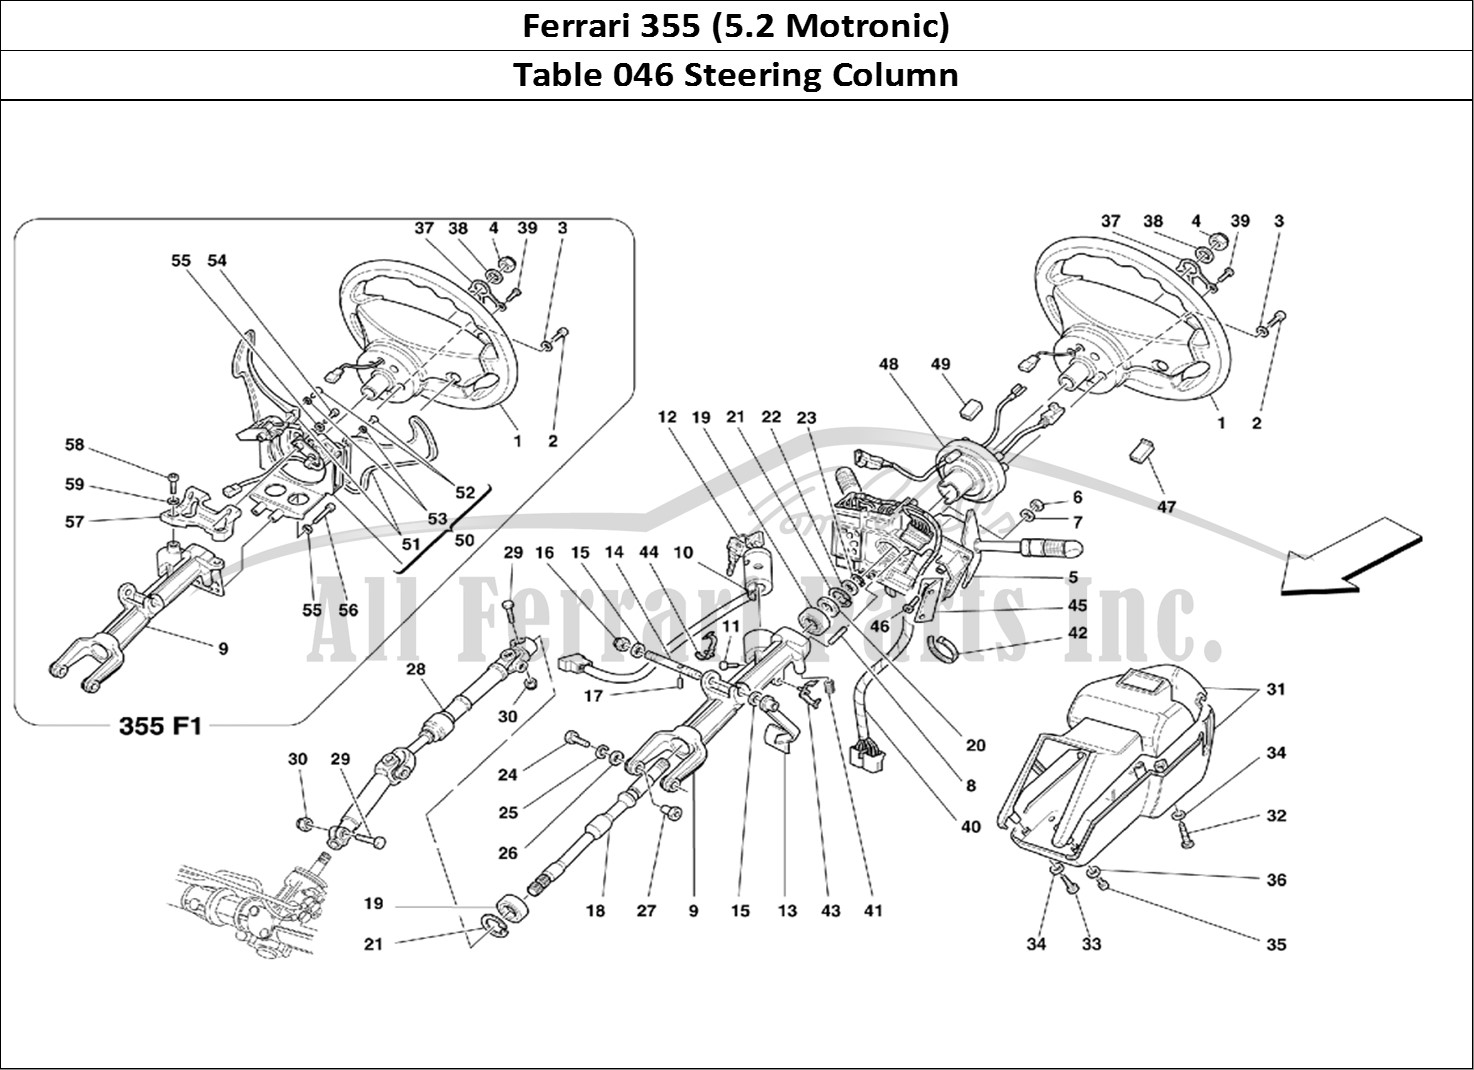 Ferrari Parts Ferrari 355 (5.2 Motronic) Page 046 Steering Column